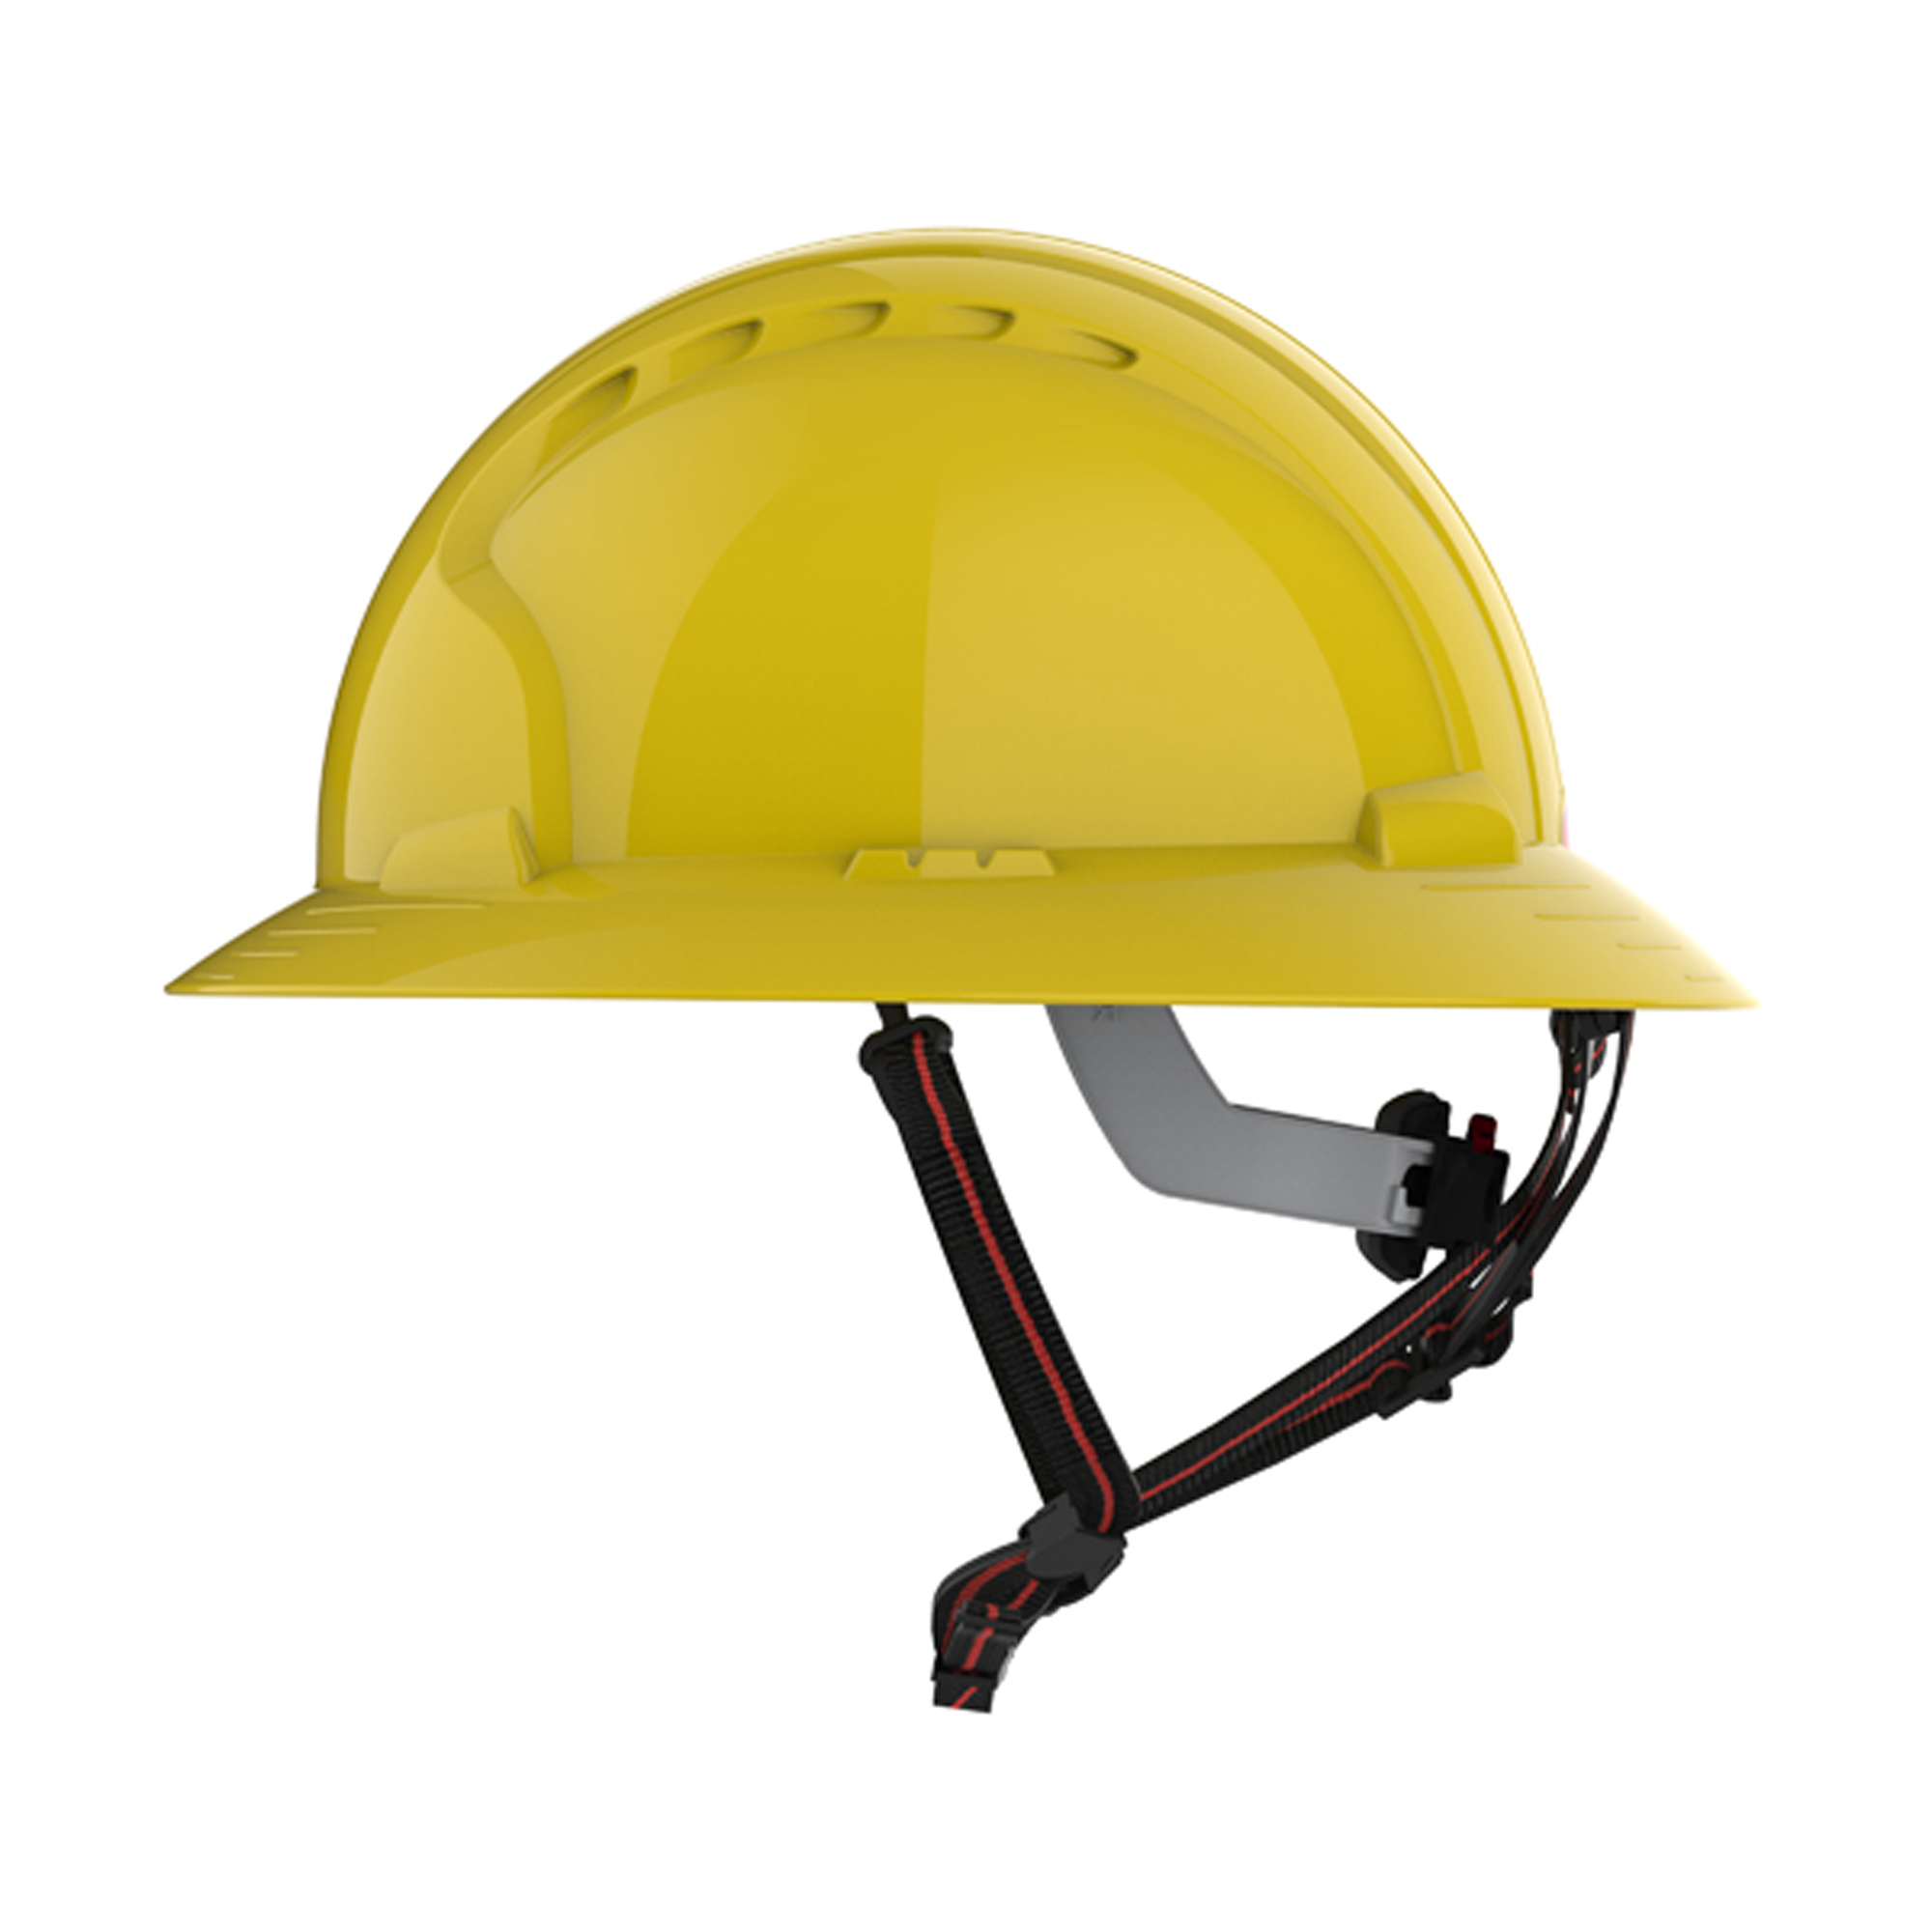 Stens 751-111 Helmet System Ratchet adjustment type Ear protectors attached 